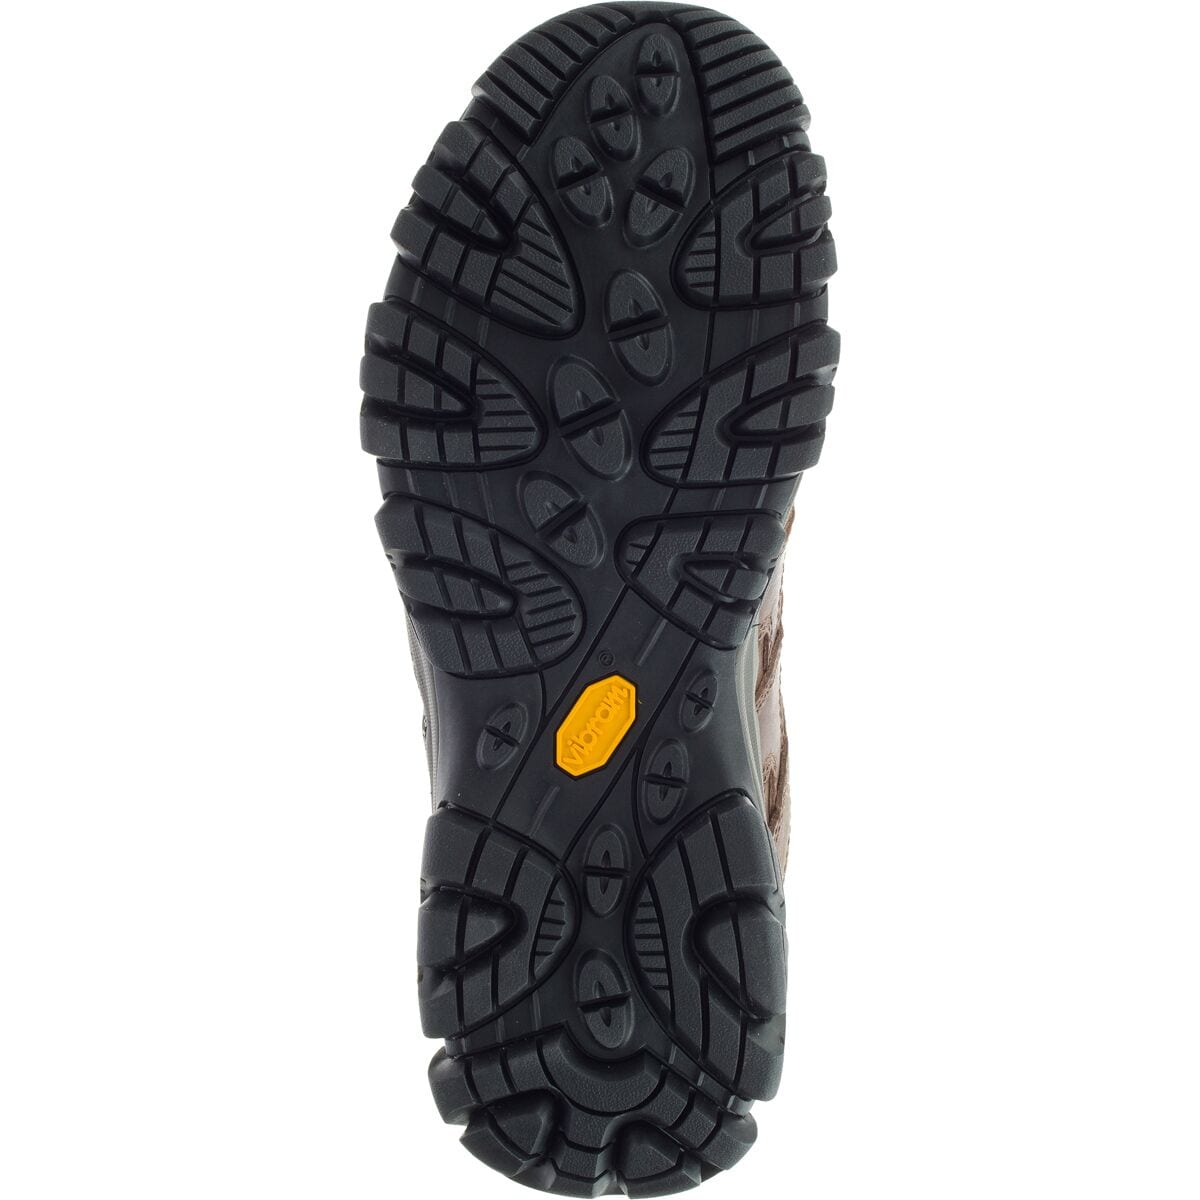 Merrell Moab 3 Prime Waterproof Hiking Shoe - Men's - Footwear